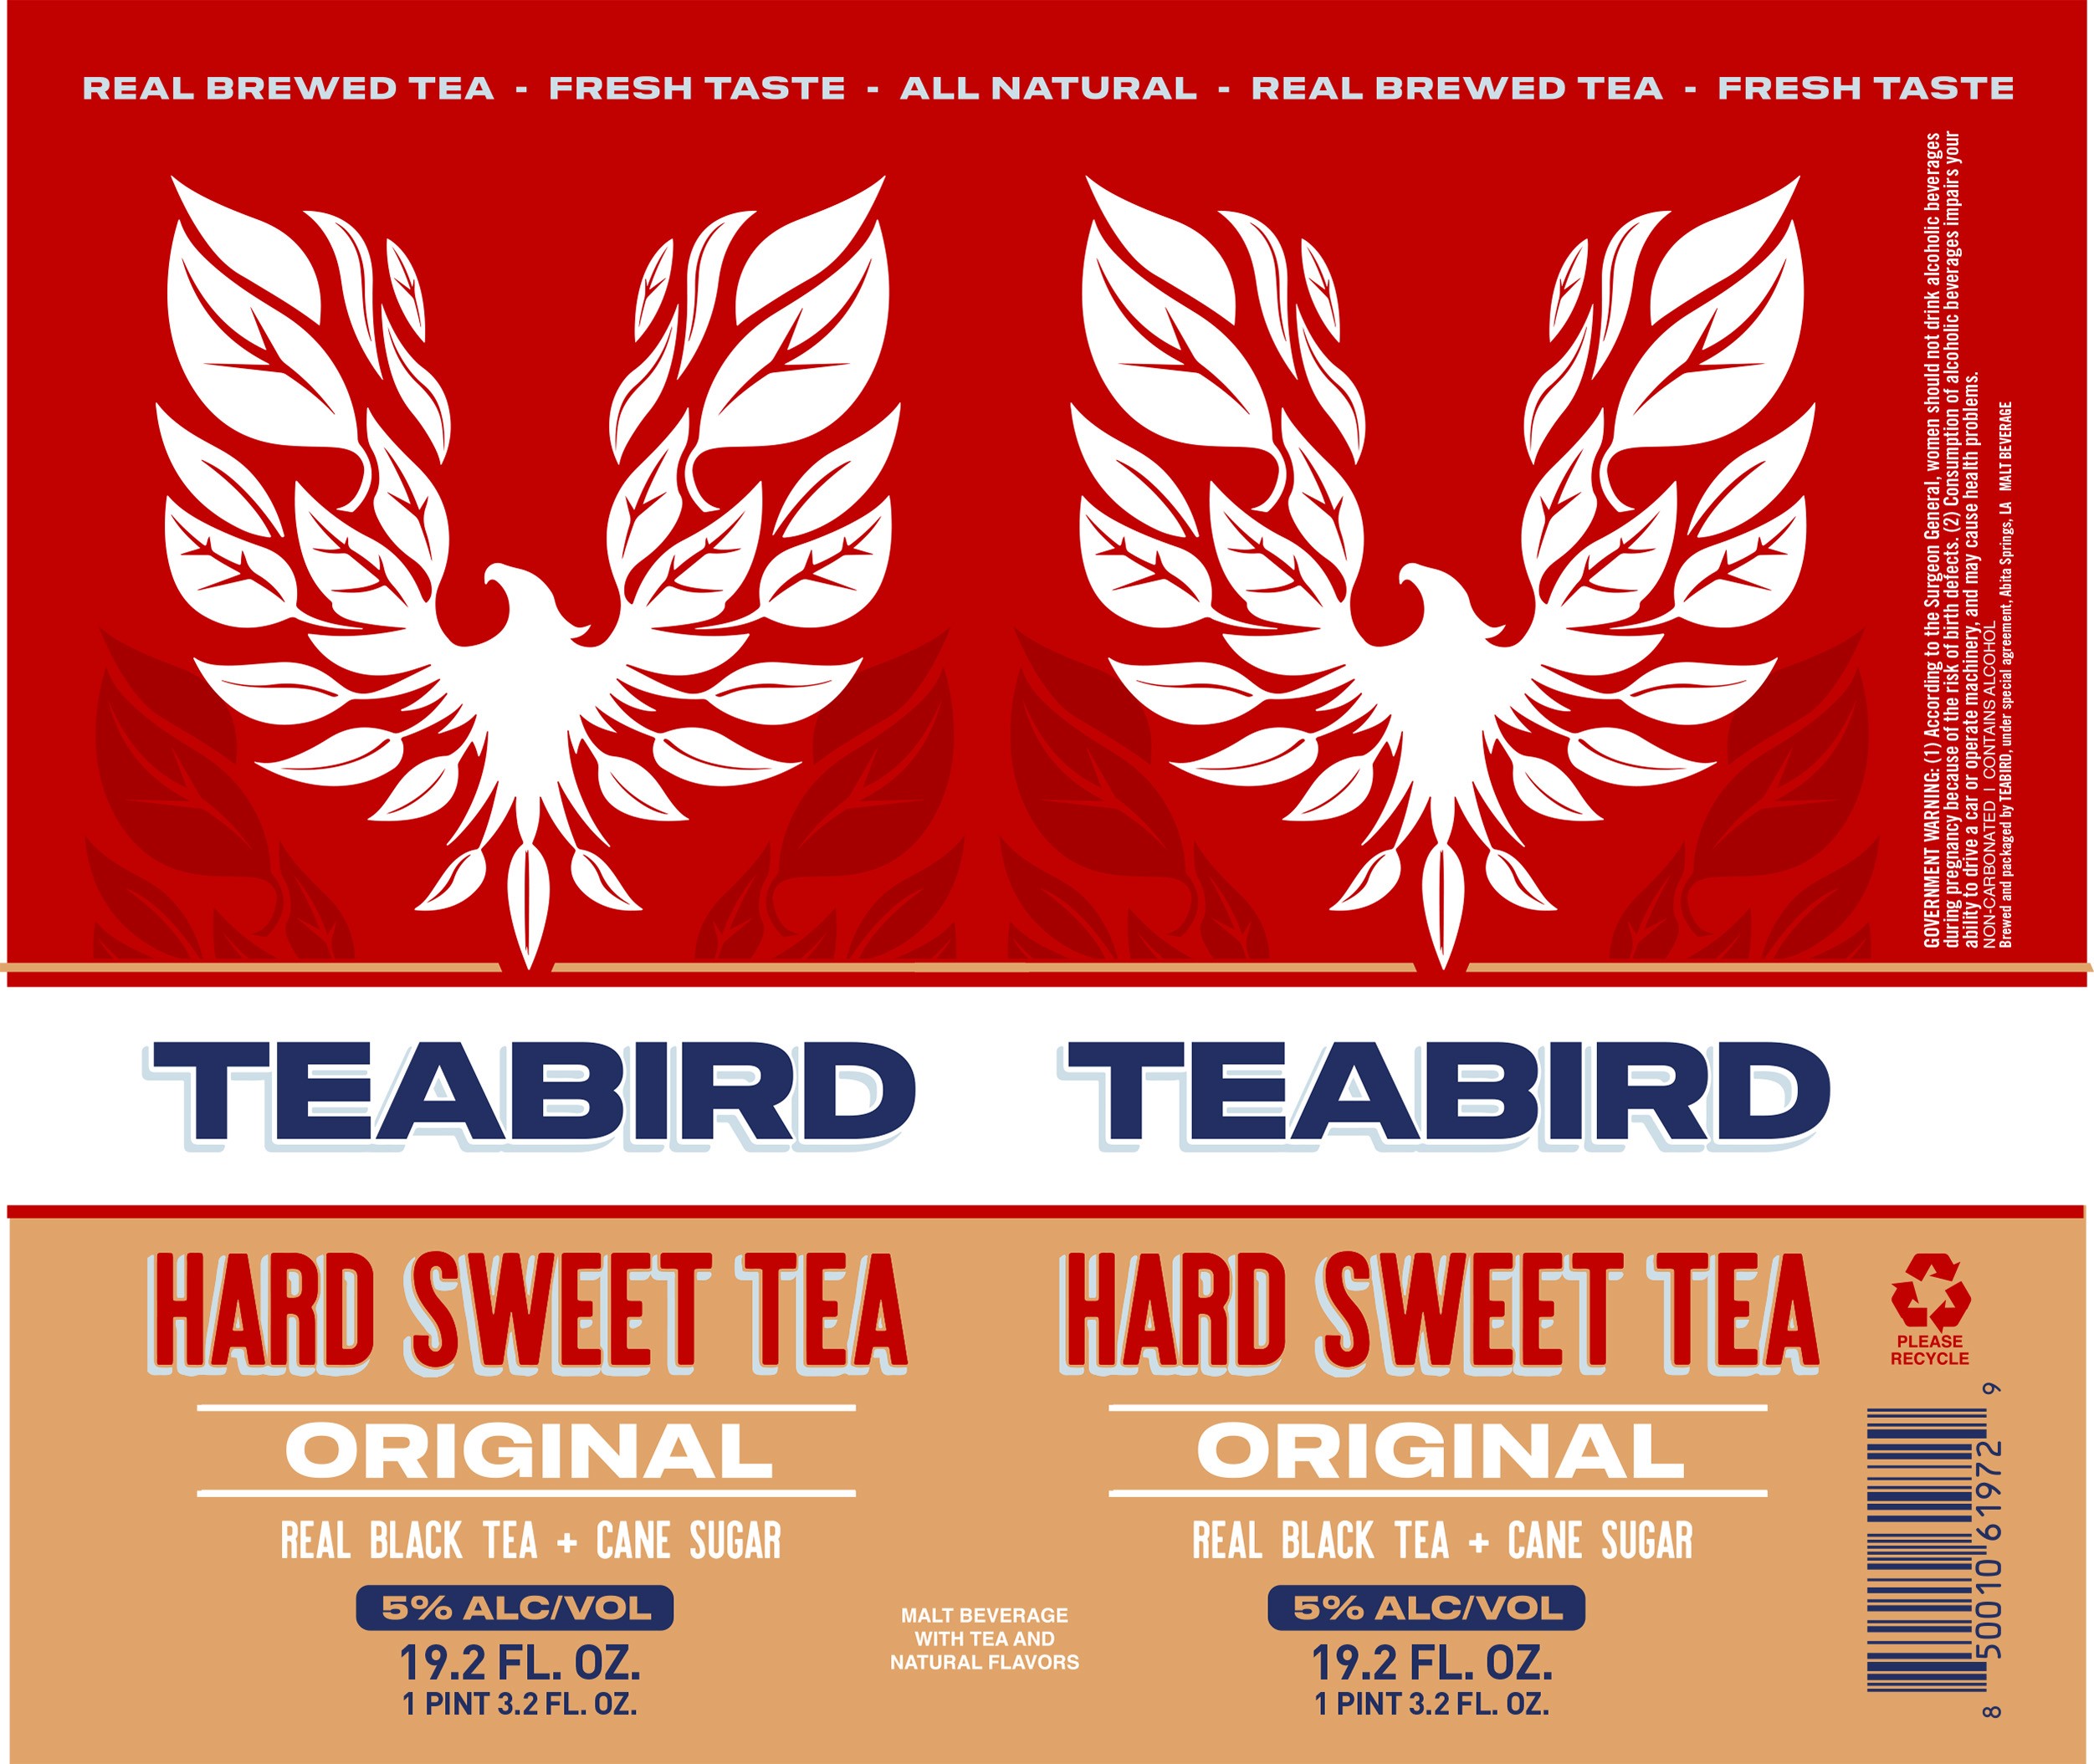 Abita Brewing and Canteen Spirits Team Up With Jason Aldean on New Teabird Hard Tea